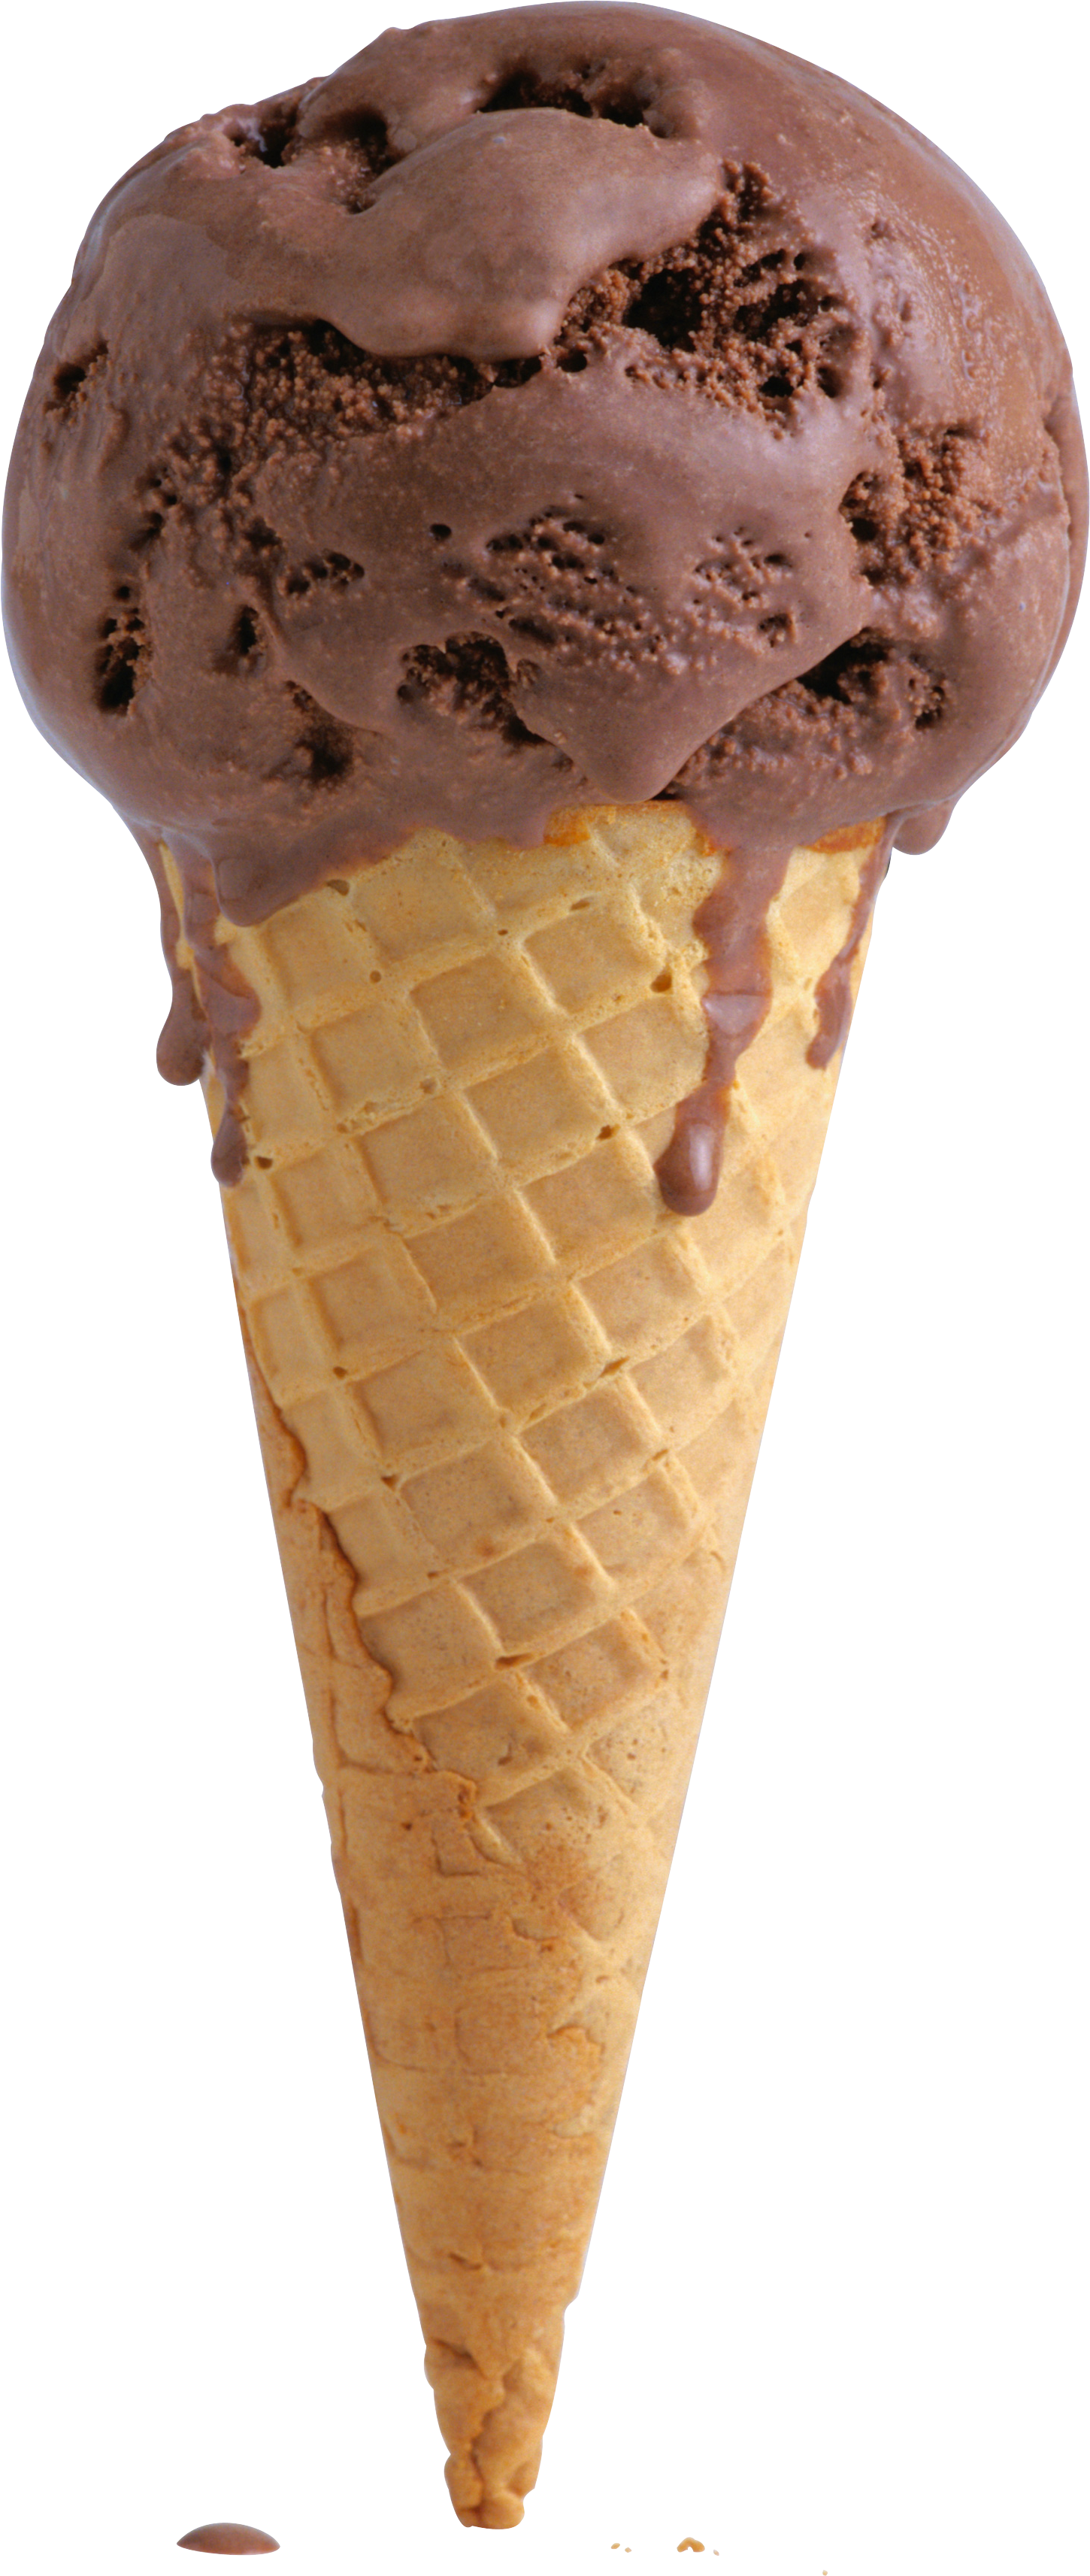 шоколадное мороженое PNG фото